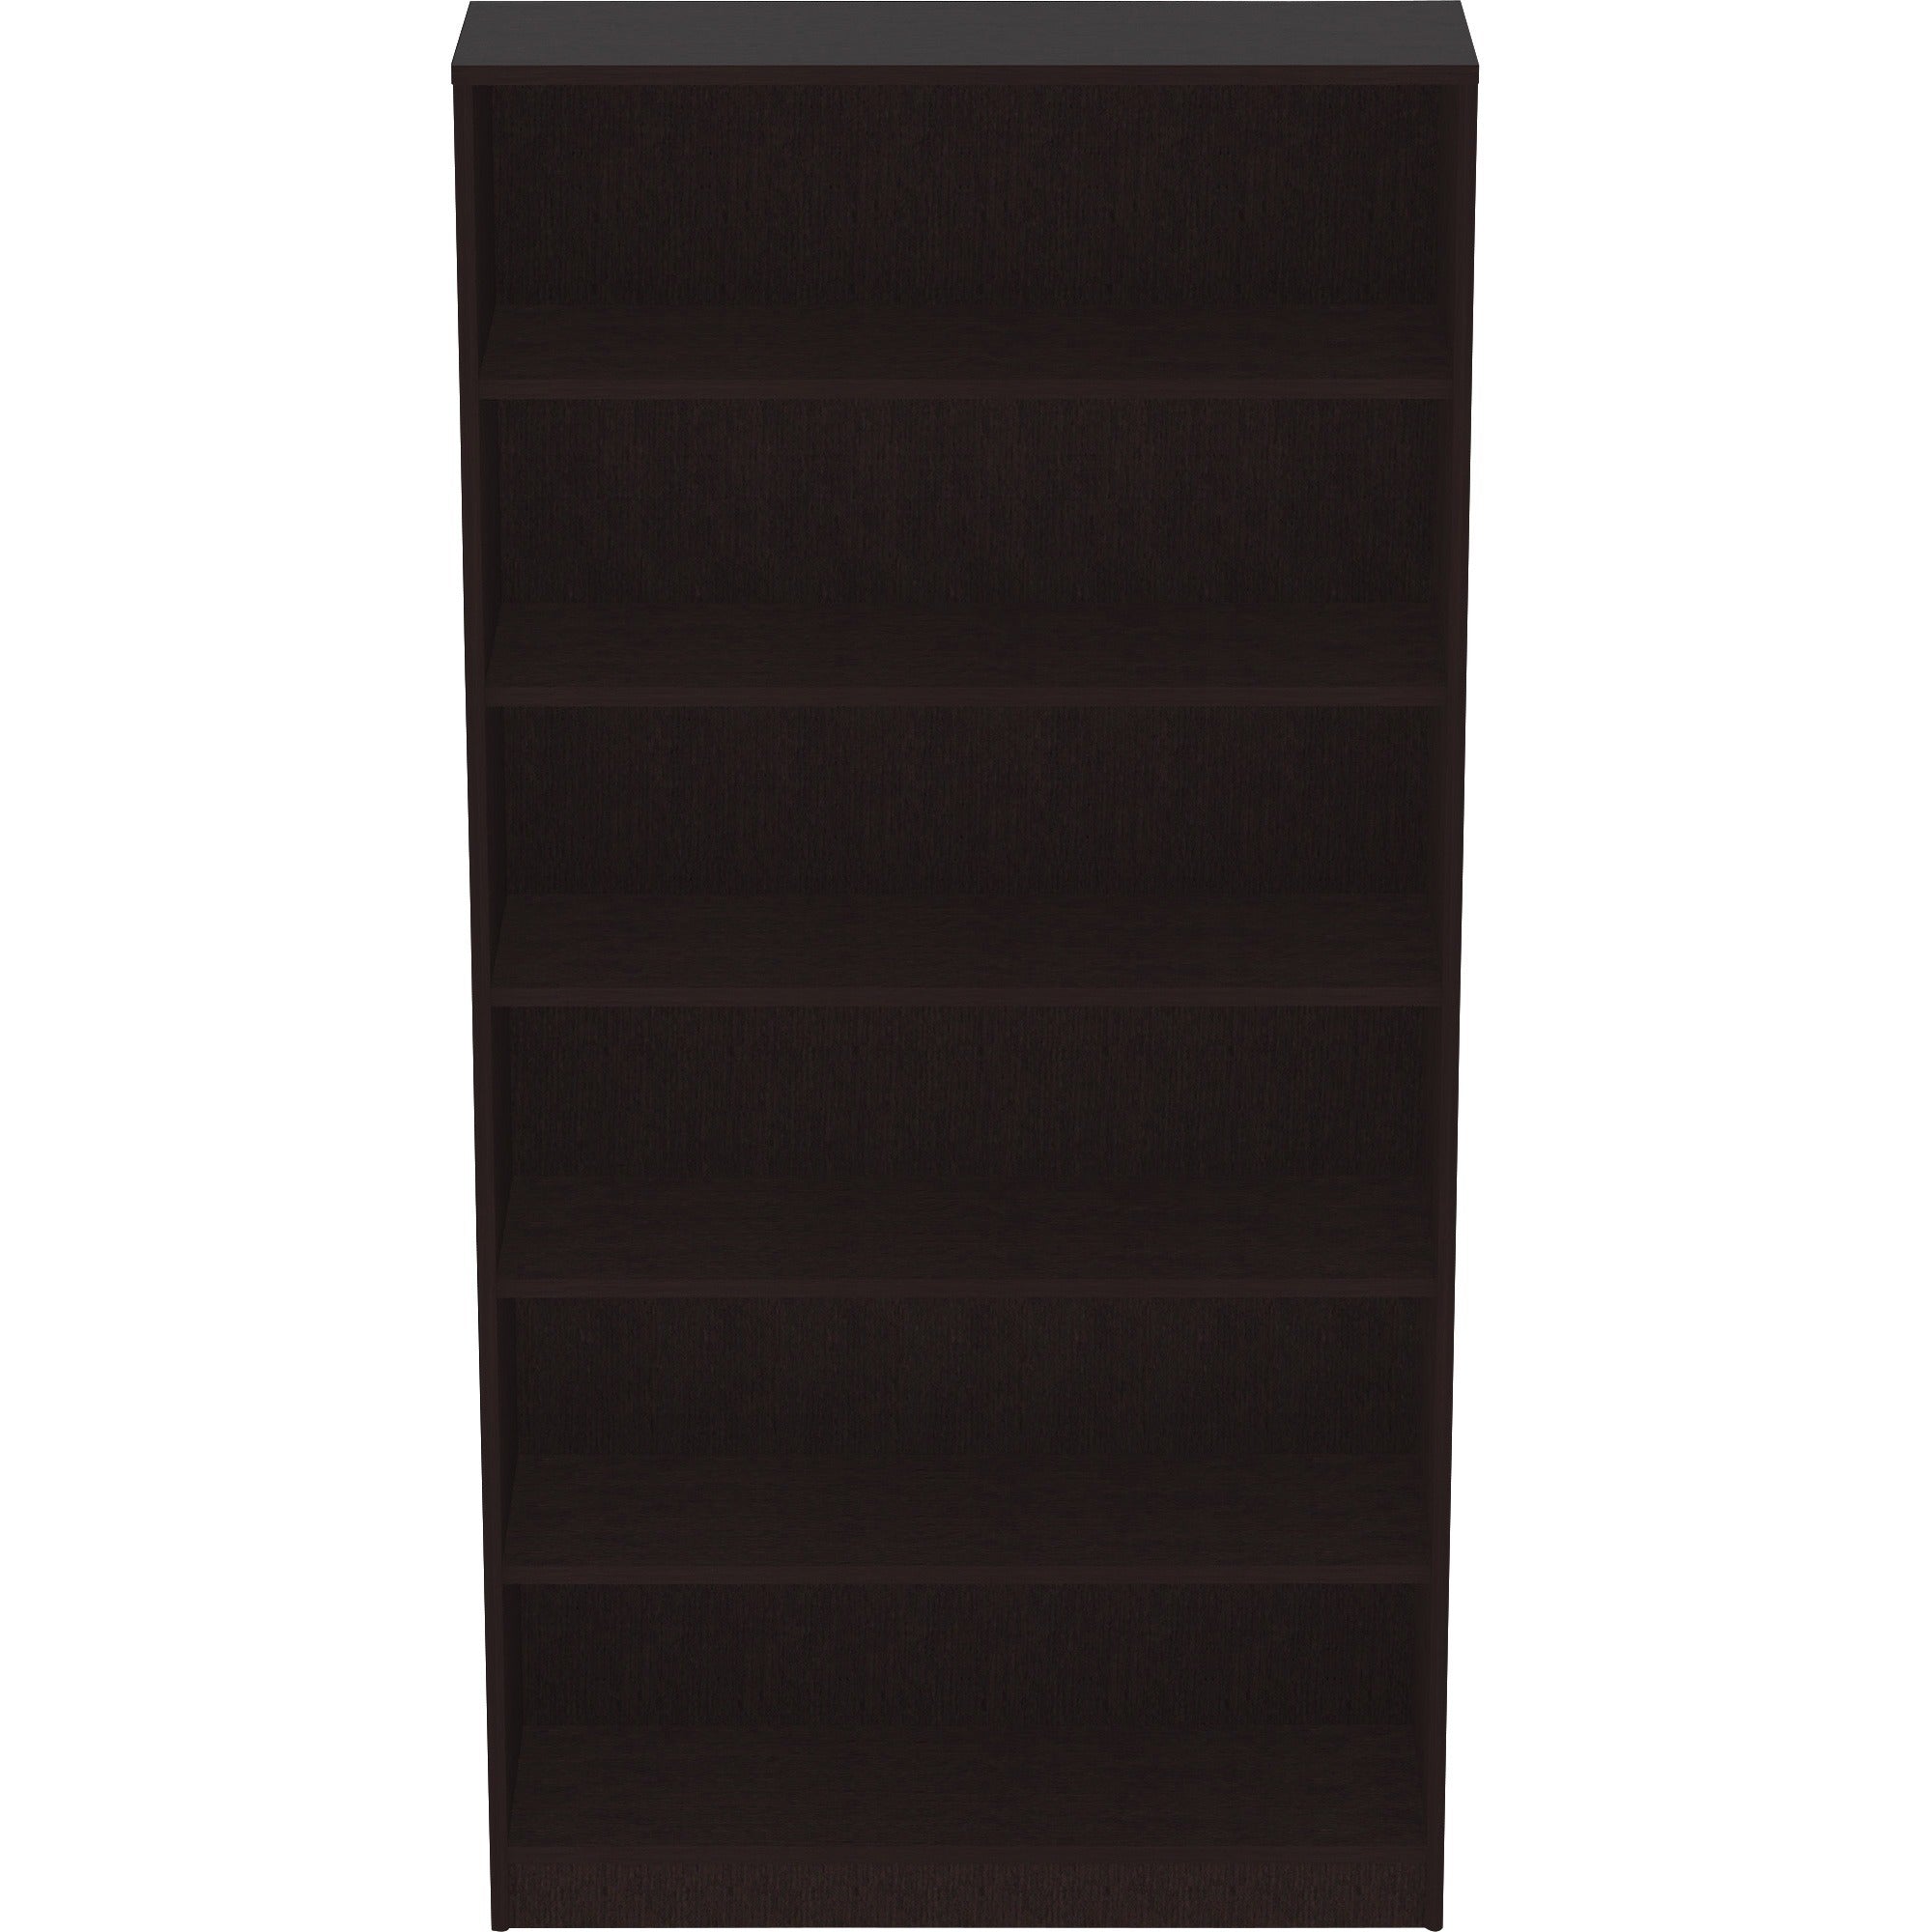 lorell-laminate-bookcase-08-shelf-36-x-1272-6-shelves-5-adjustable-shelfves-square-edge-material-thermofused-laminate-tfl-finish-espresso_llr18228 - 2